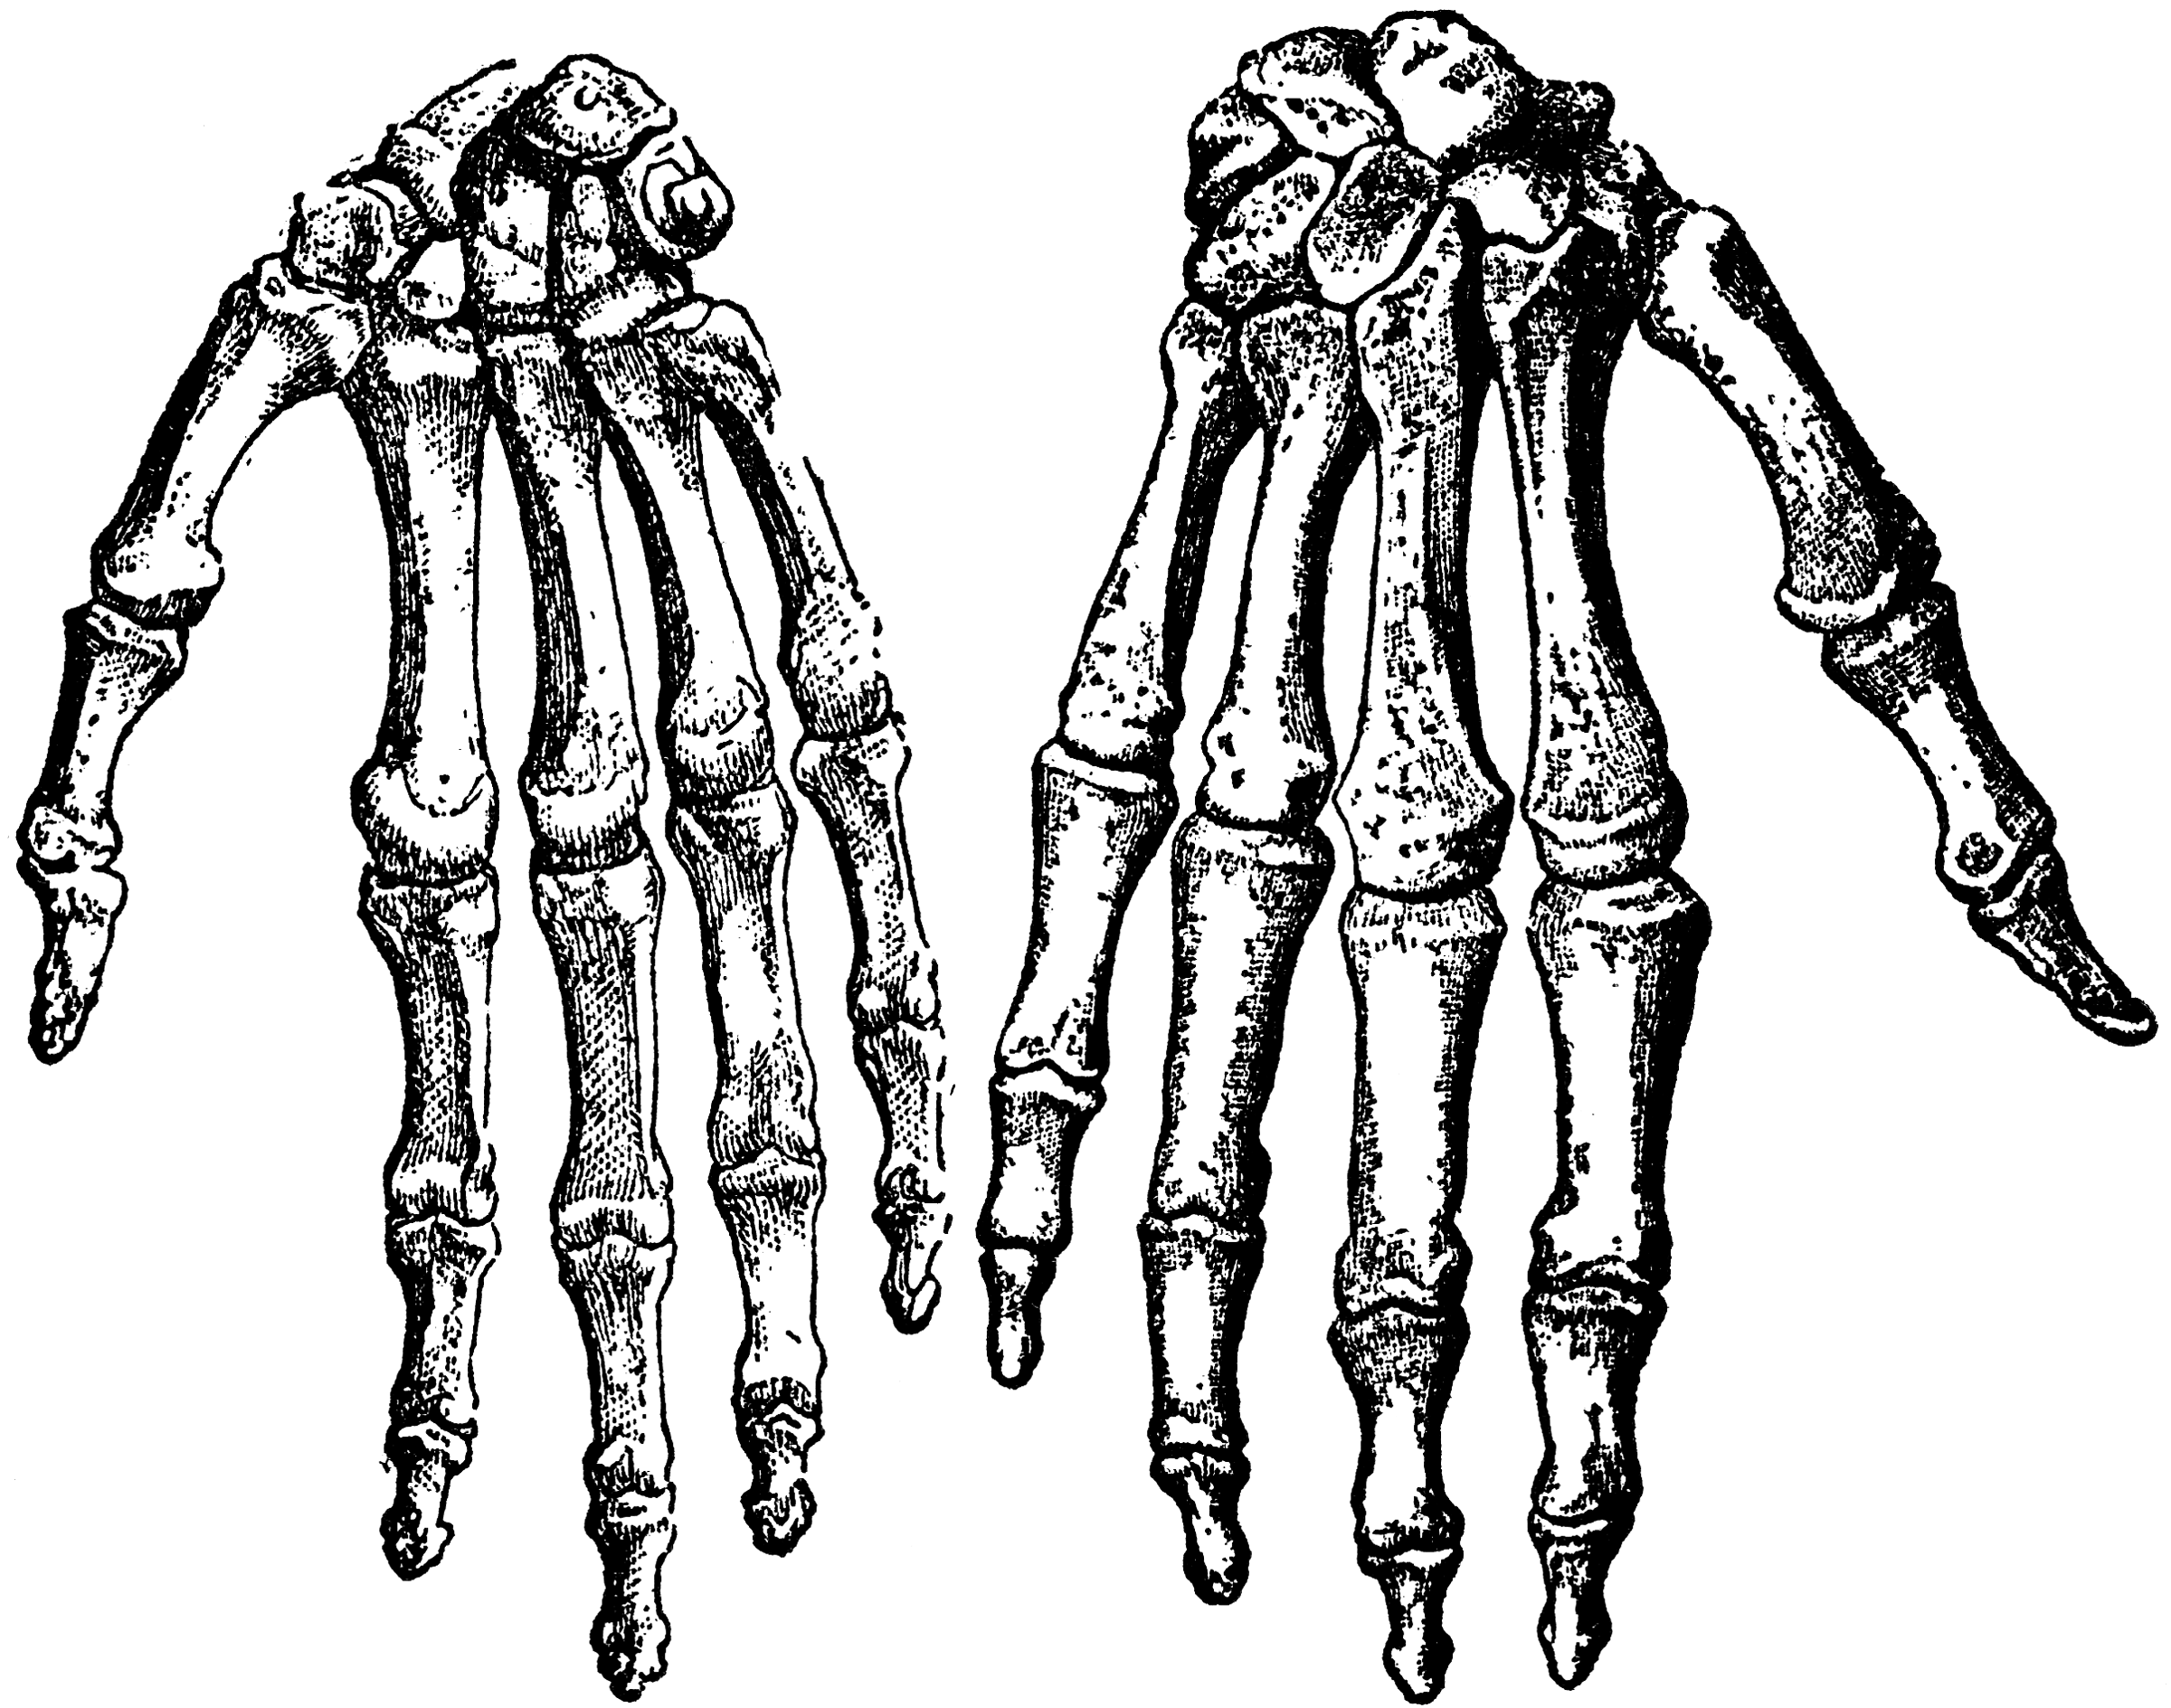 Hand bone. Скелет кисти руки человека. Кисть скелета сбоку. Кости запястья скелет. Кисть руки скелет анатомия.